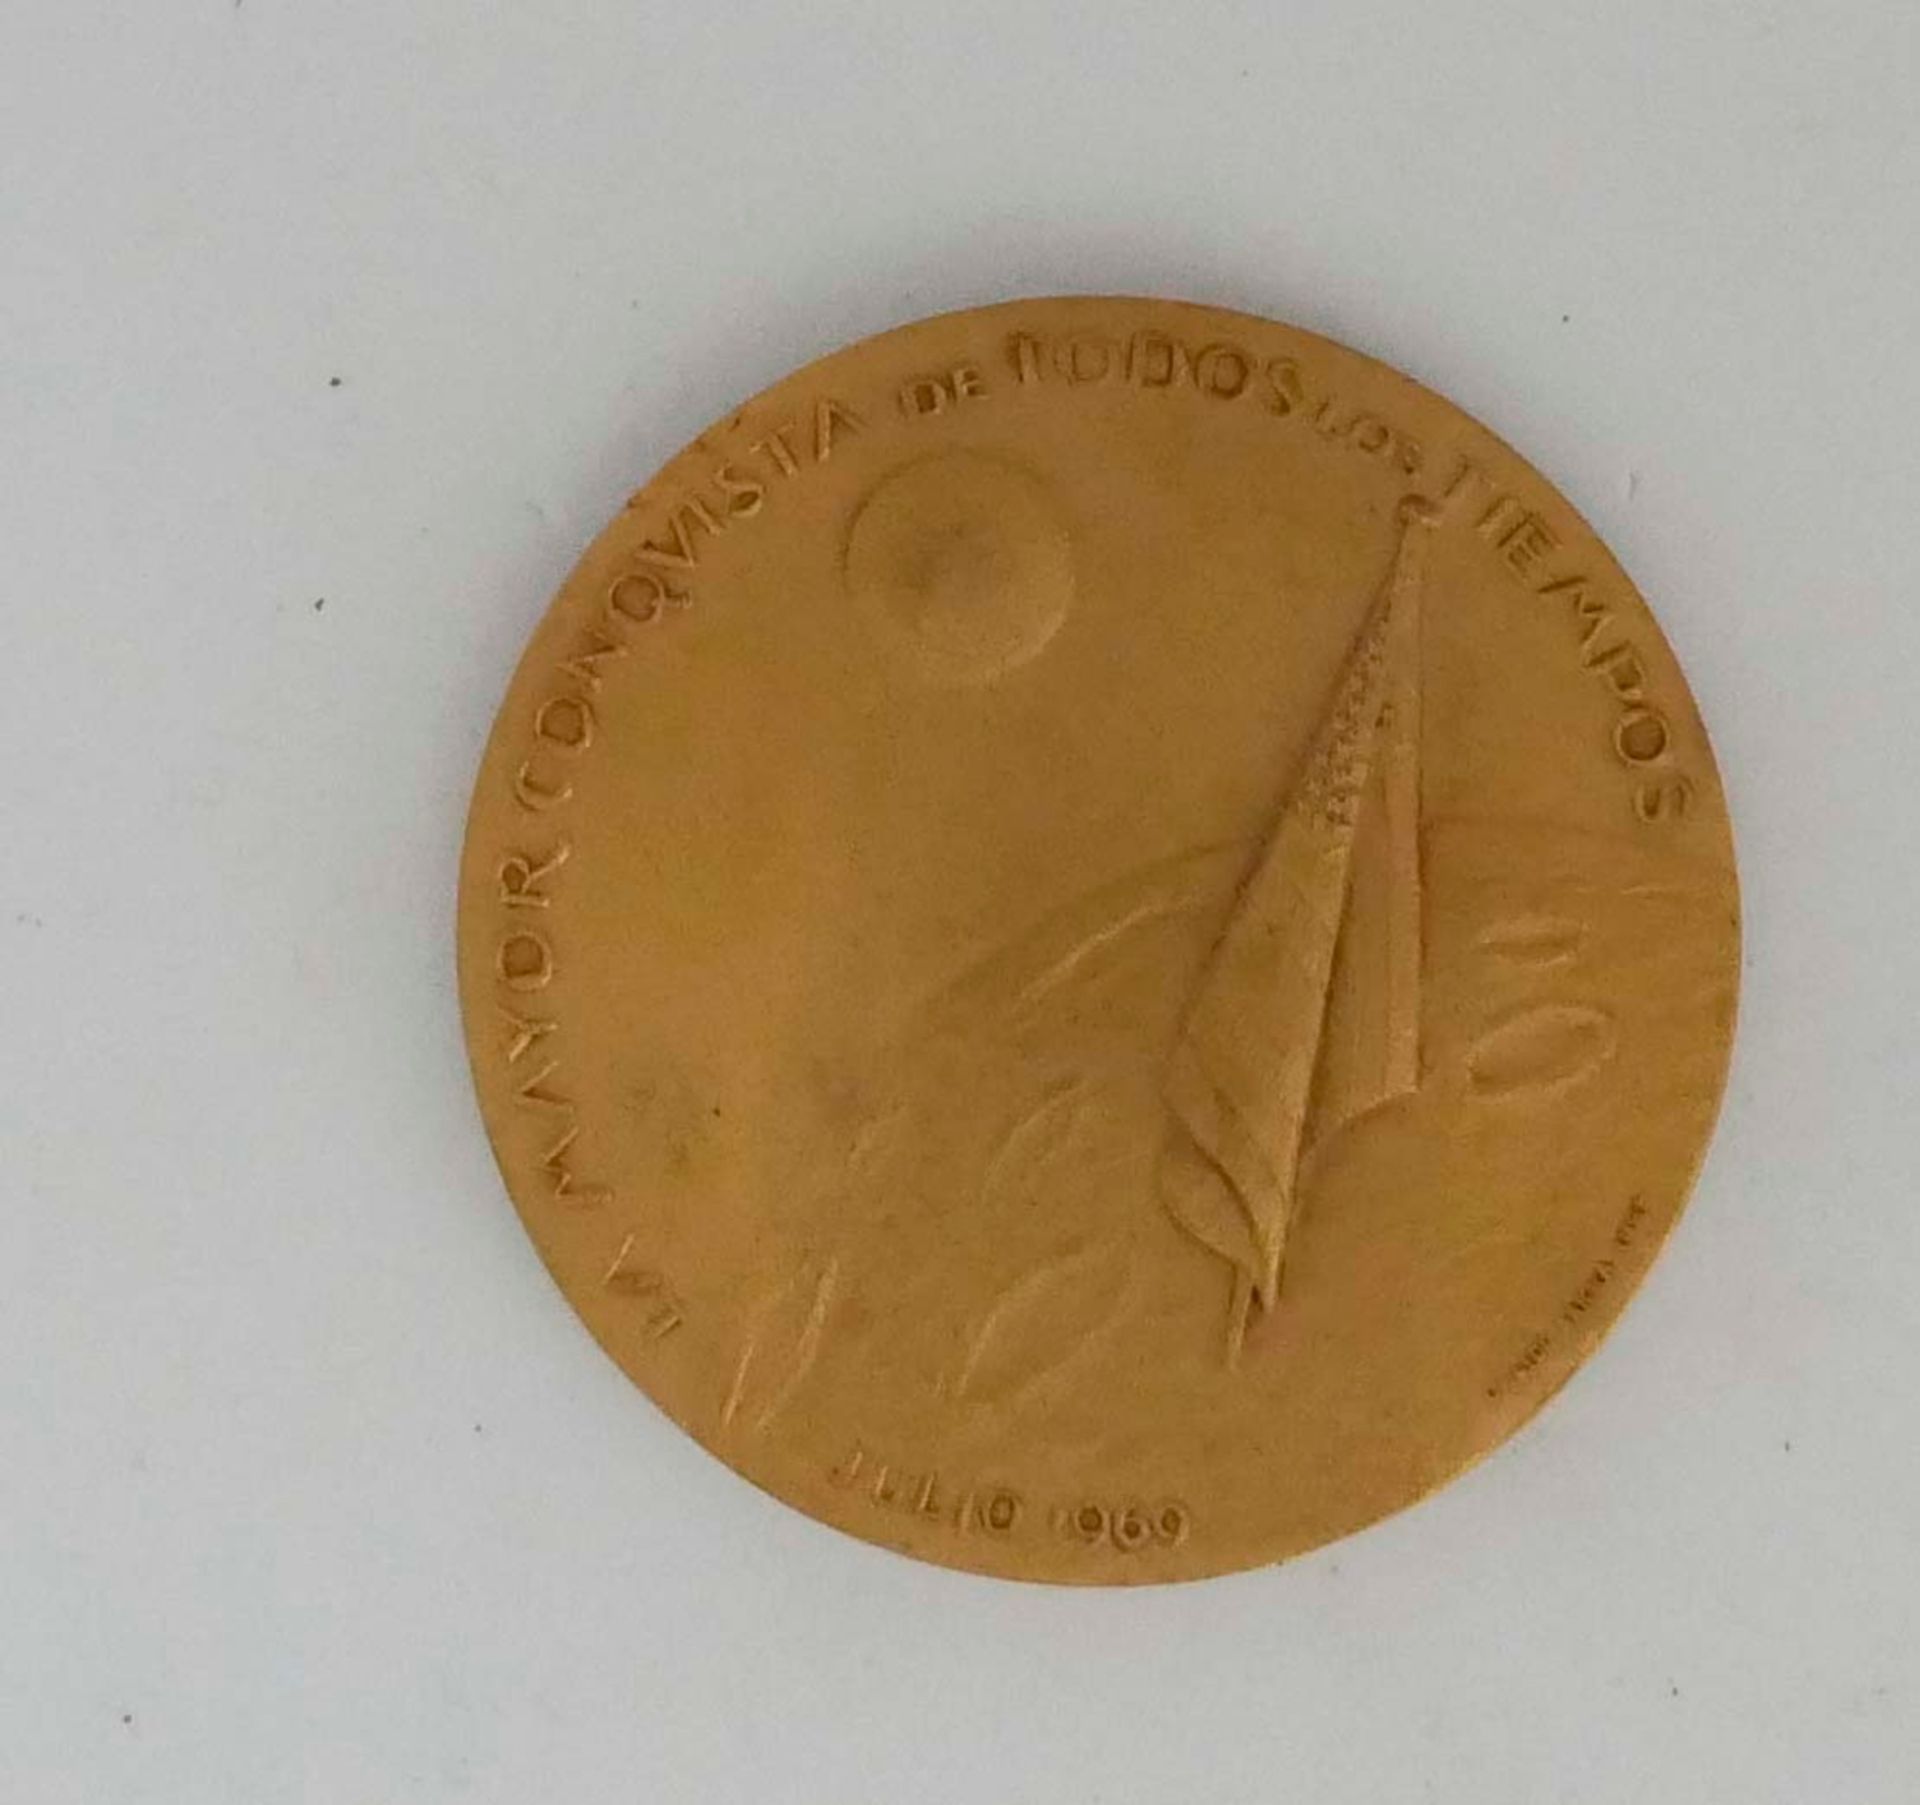 Medaille "Richard M. Nixon" President of the USA. Juli 1969. Durchmesser ca. 5 cm - Image 2 of 2